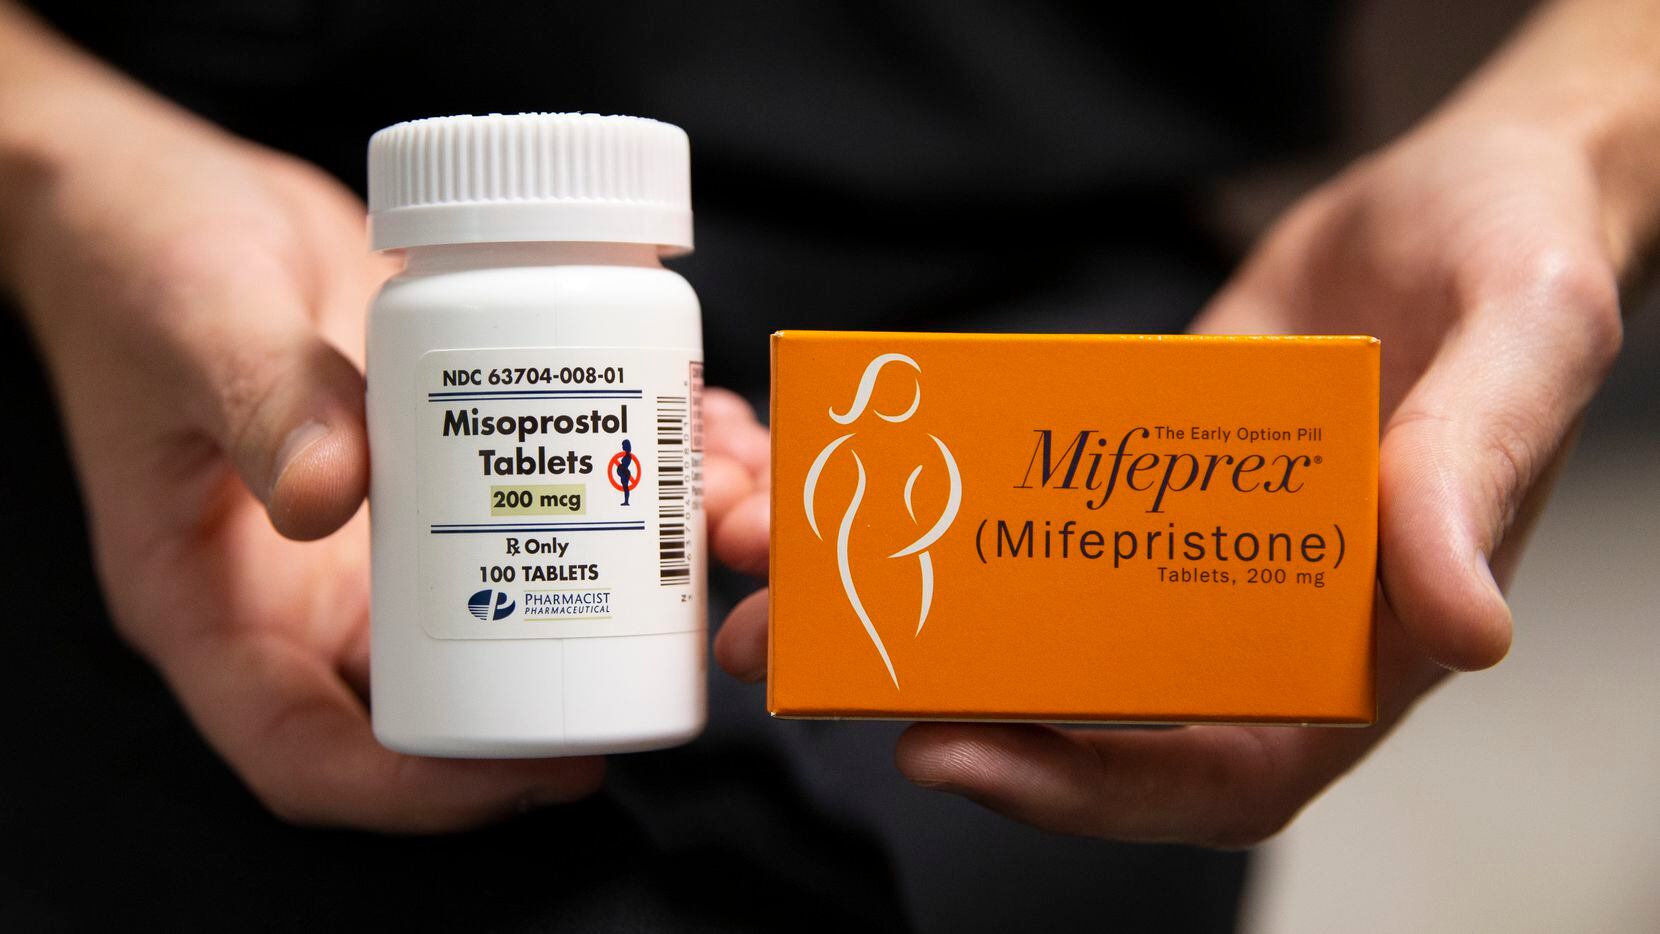 Dr. Joe Nelson holds a bottle of Misoprostol and a box of Mifeprex (Mifespristone)...